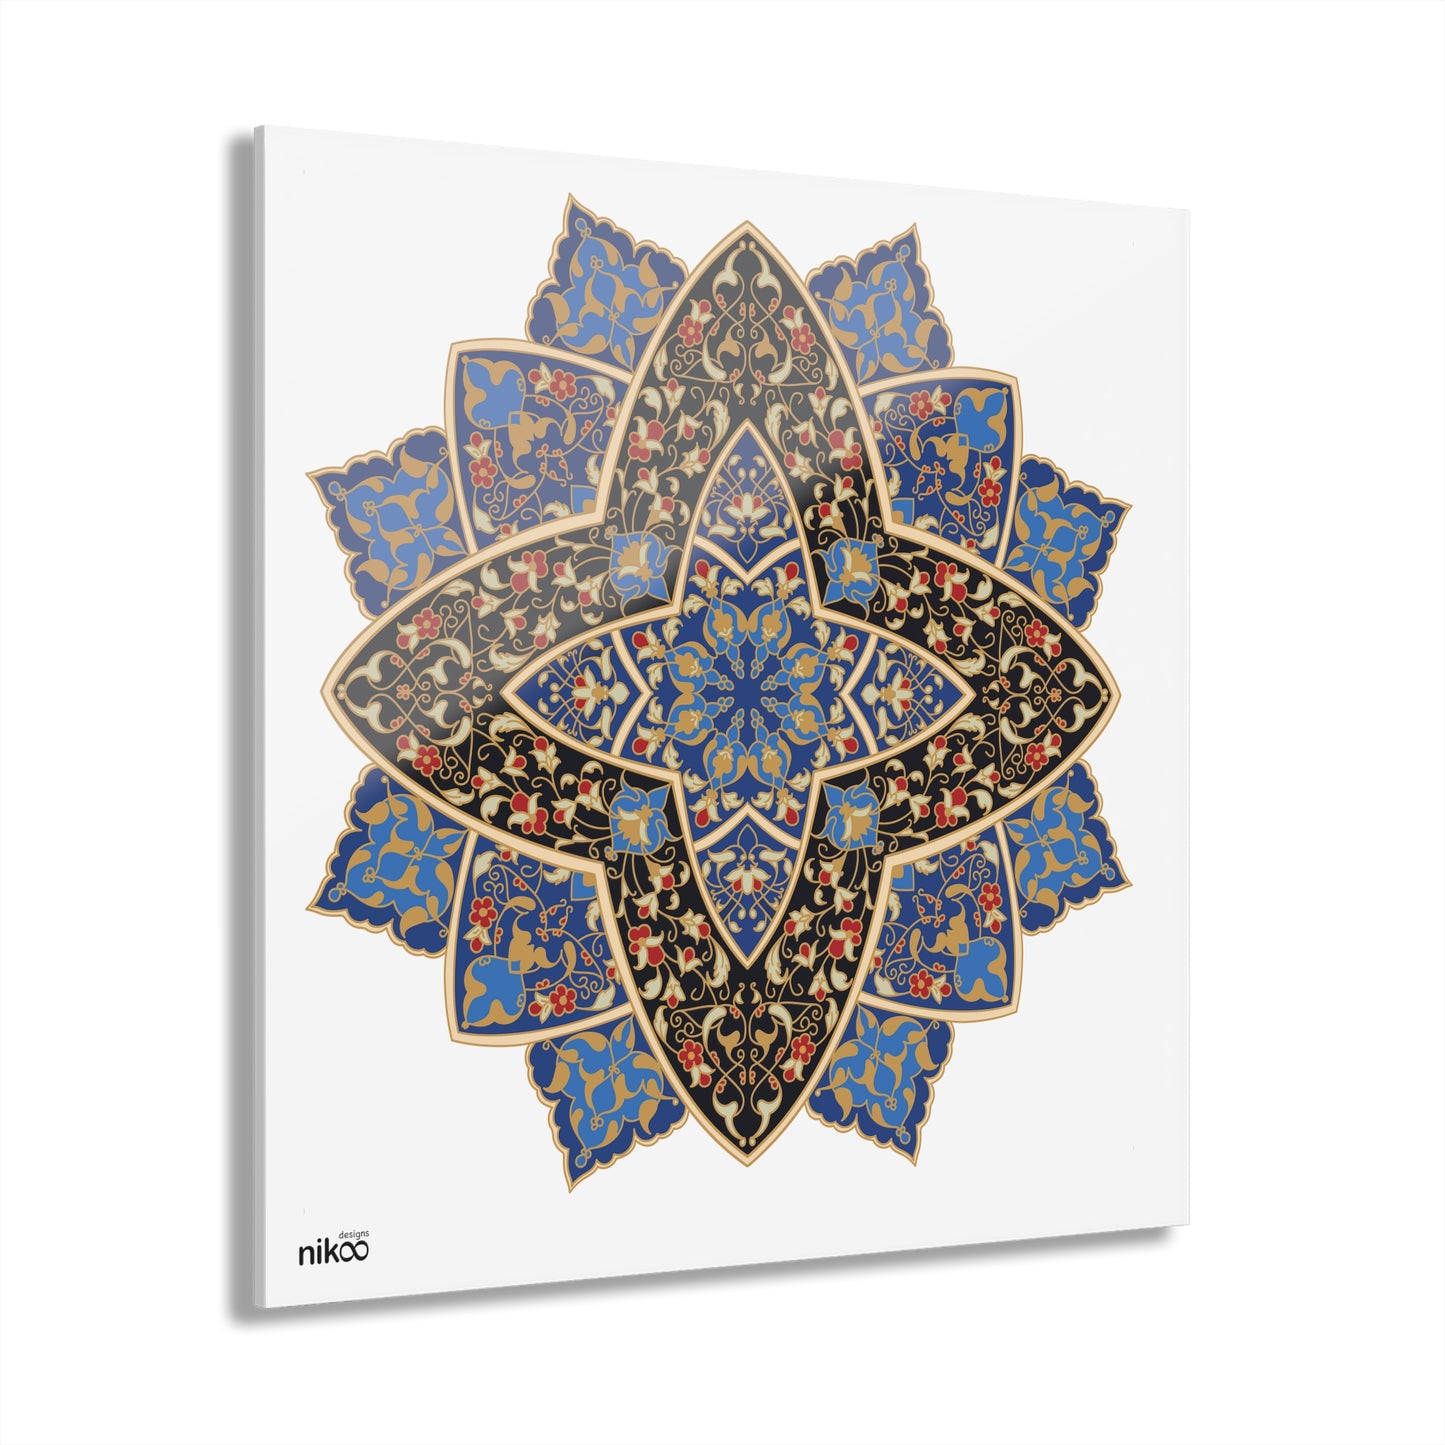 Acrylic Prints with Tazheeb: دیوارکوب پرینت اکریلیک با طرح تذهیب شمسه